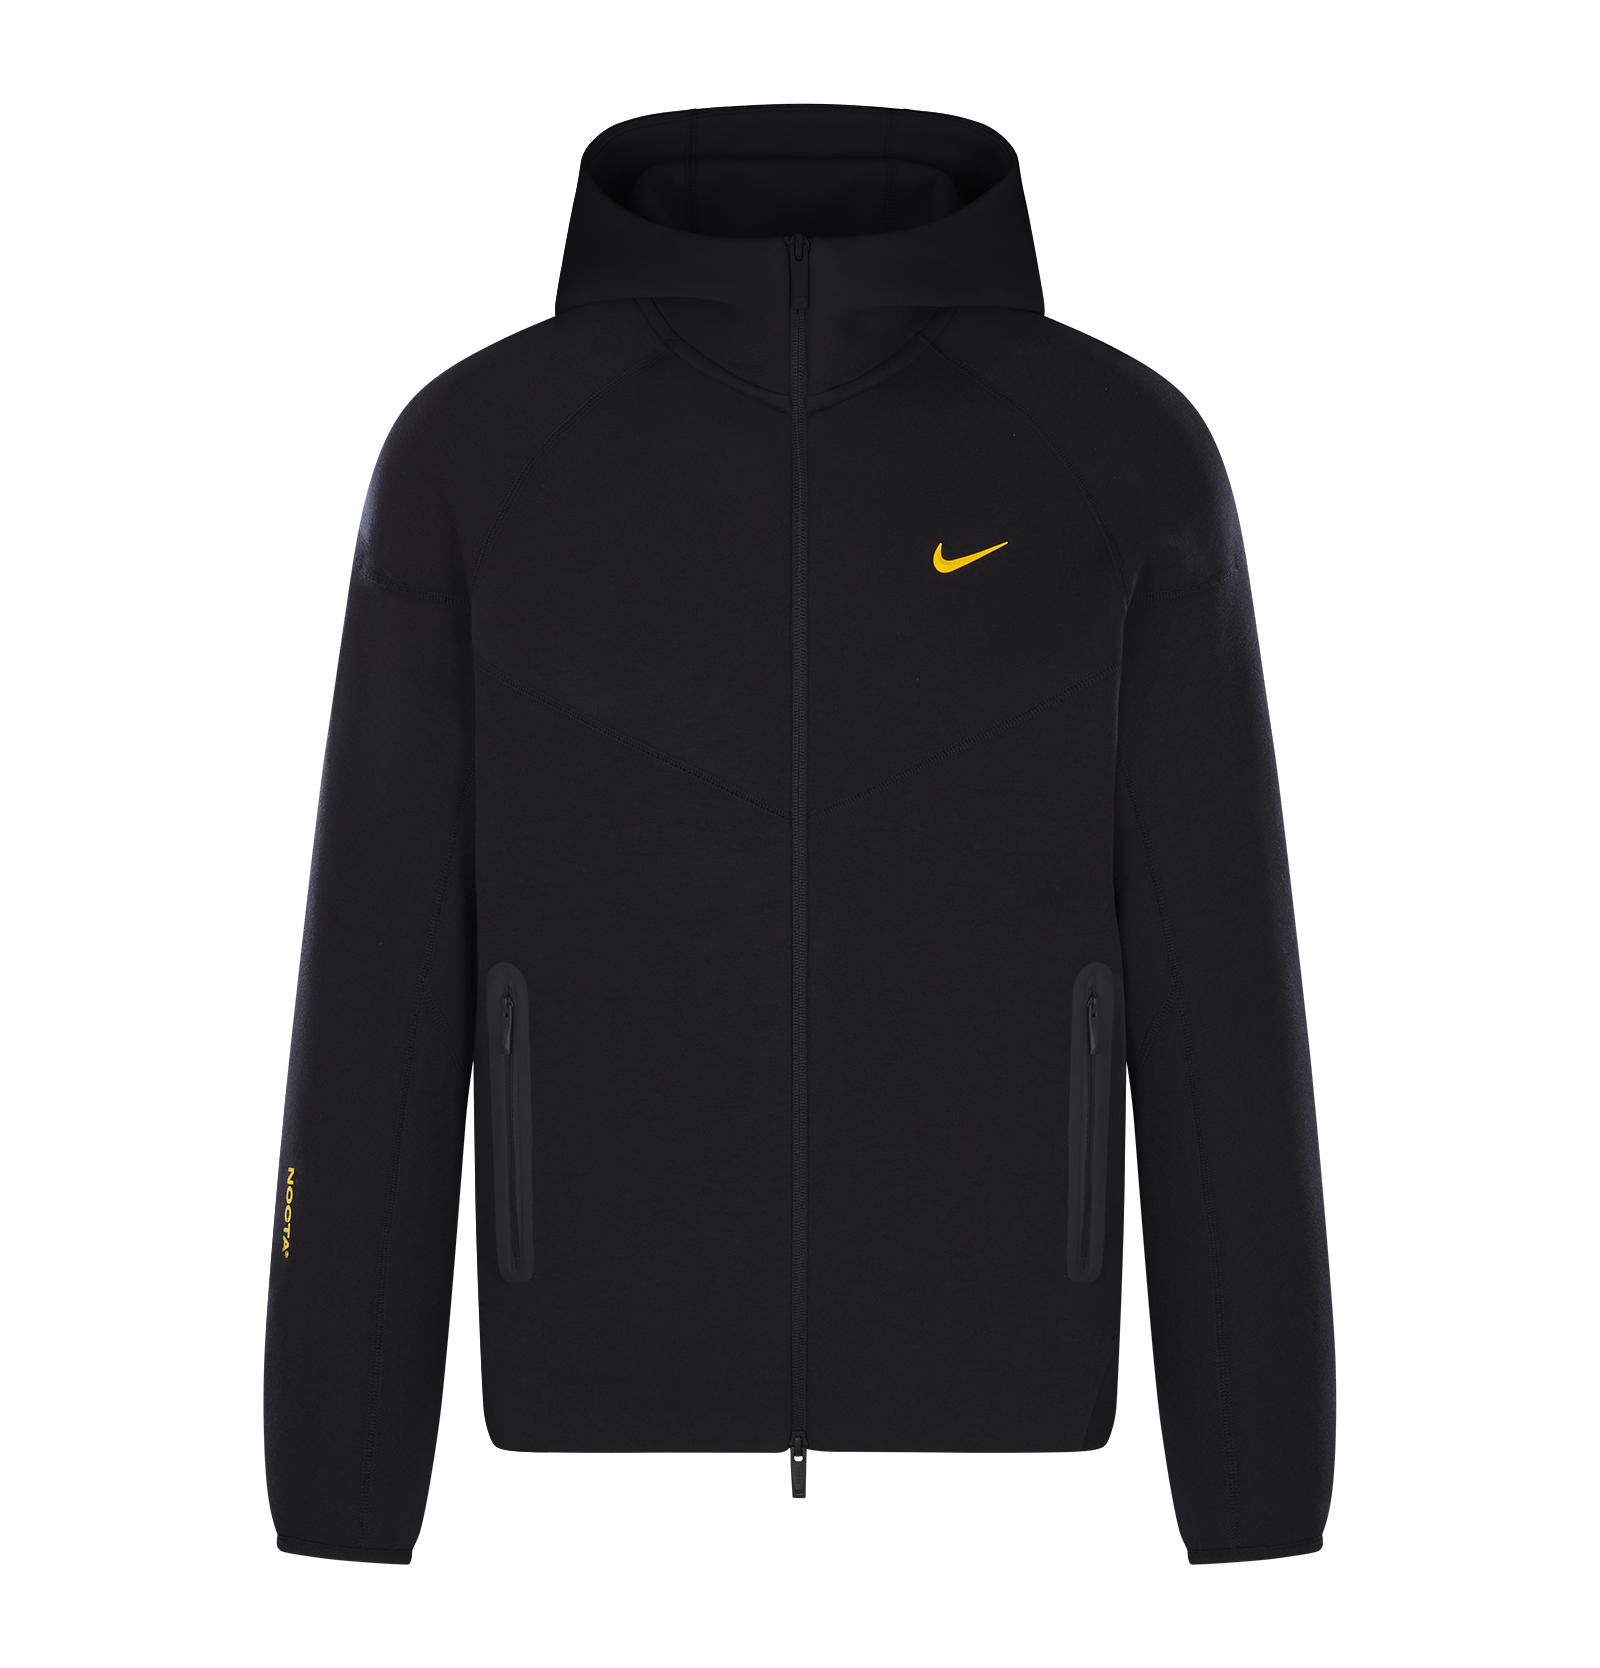 The Full Reveal: NOCTA x Nike Tech Fleece Pieces Sport a Stealthy Black Hue